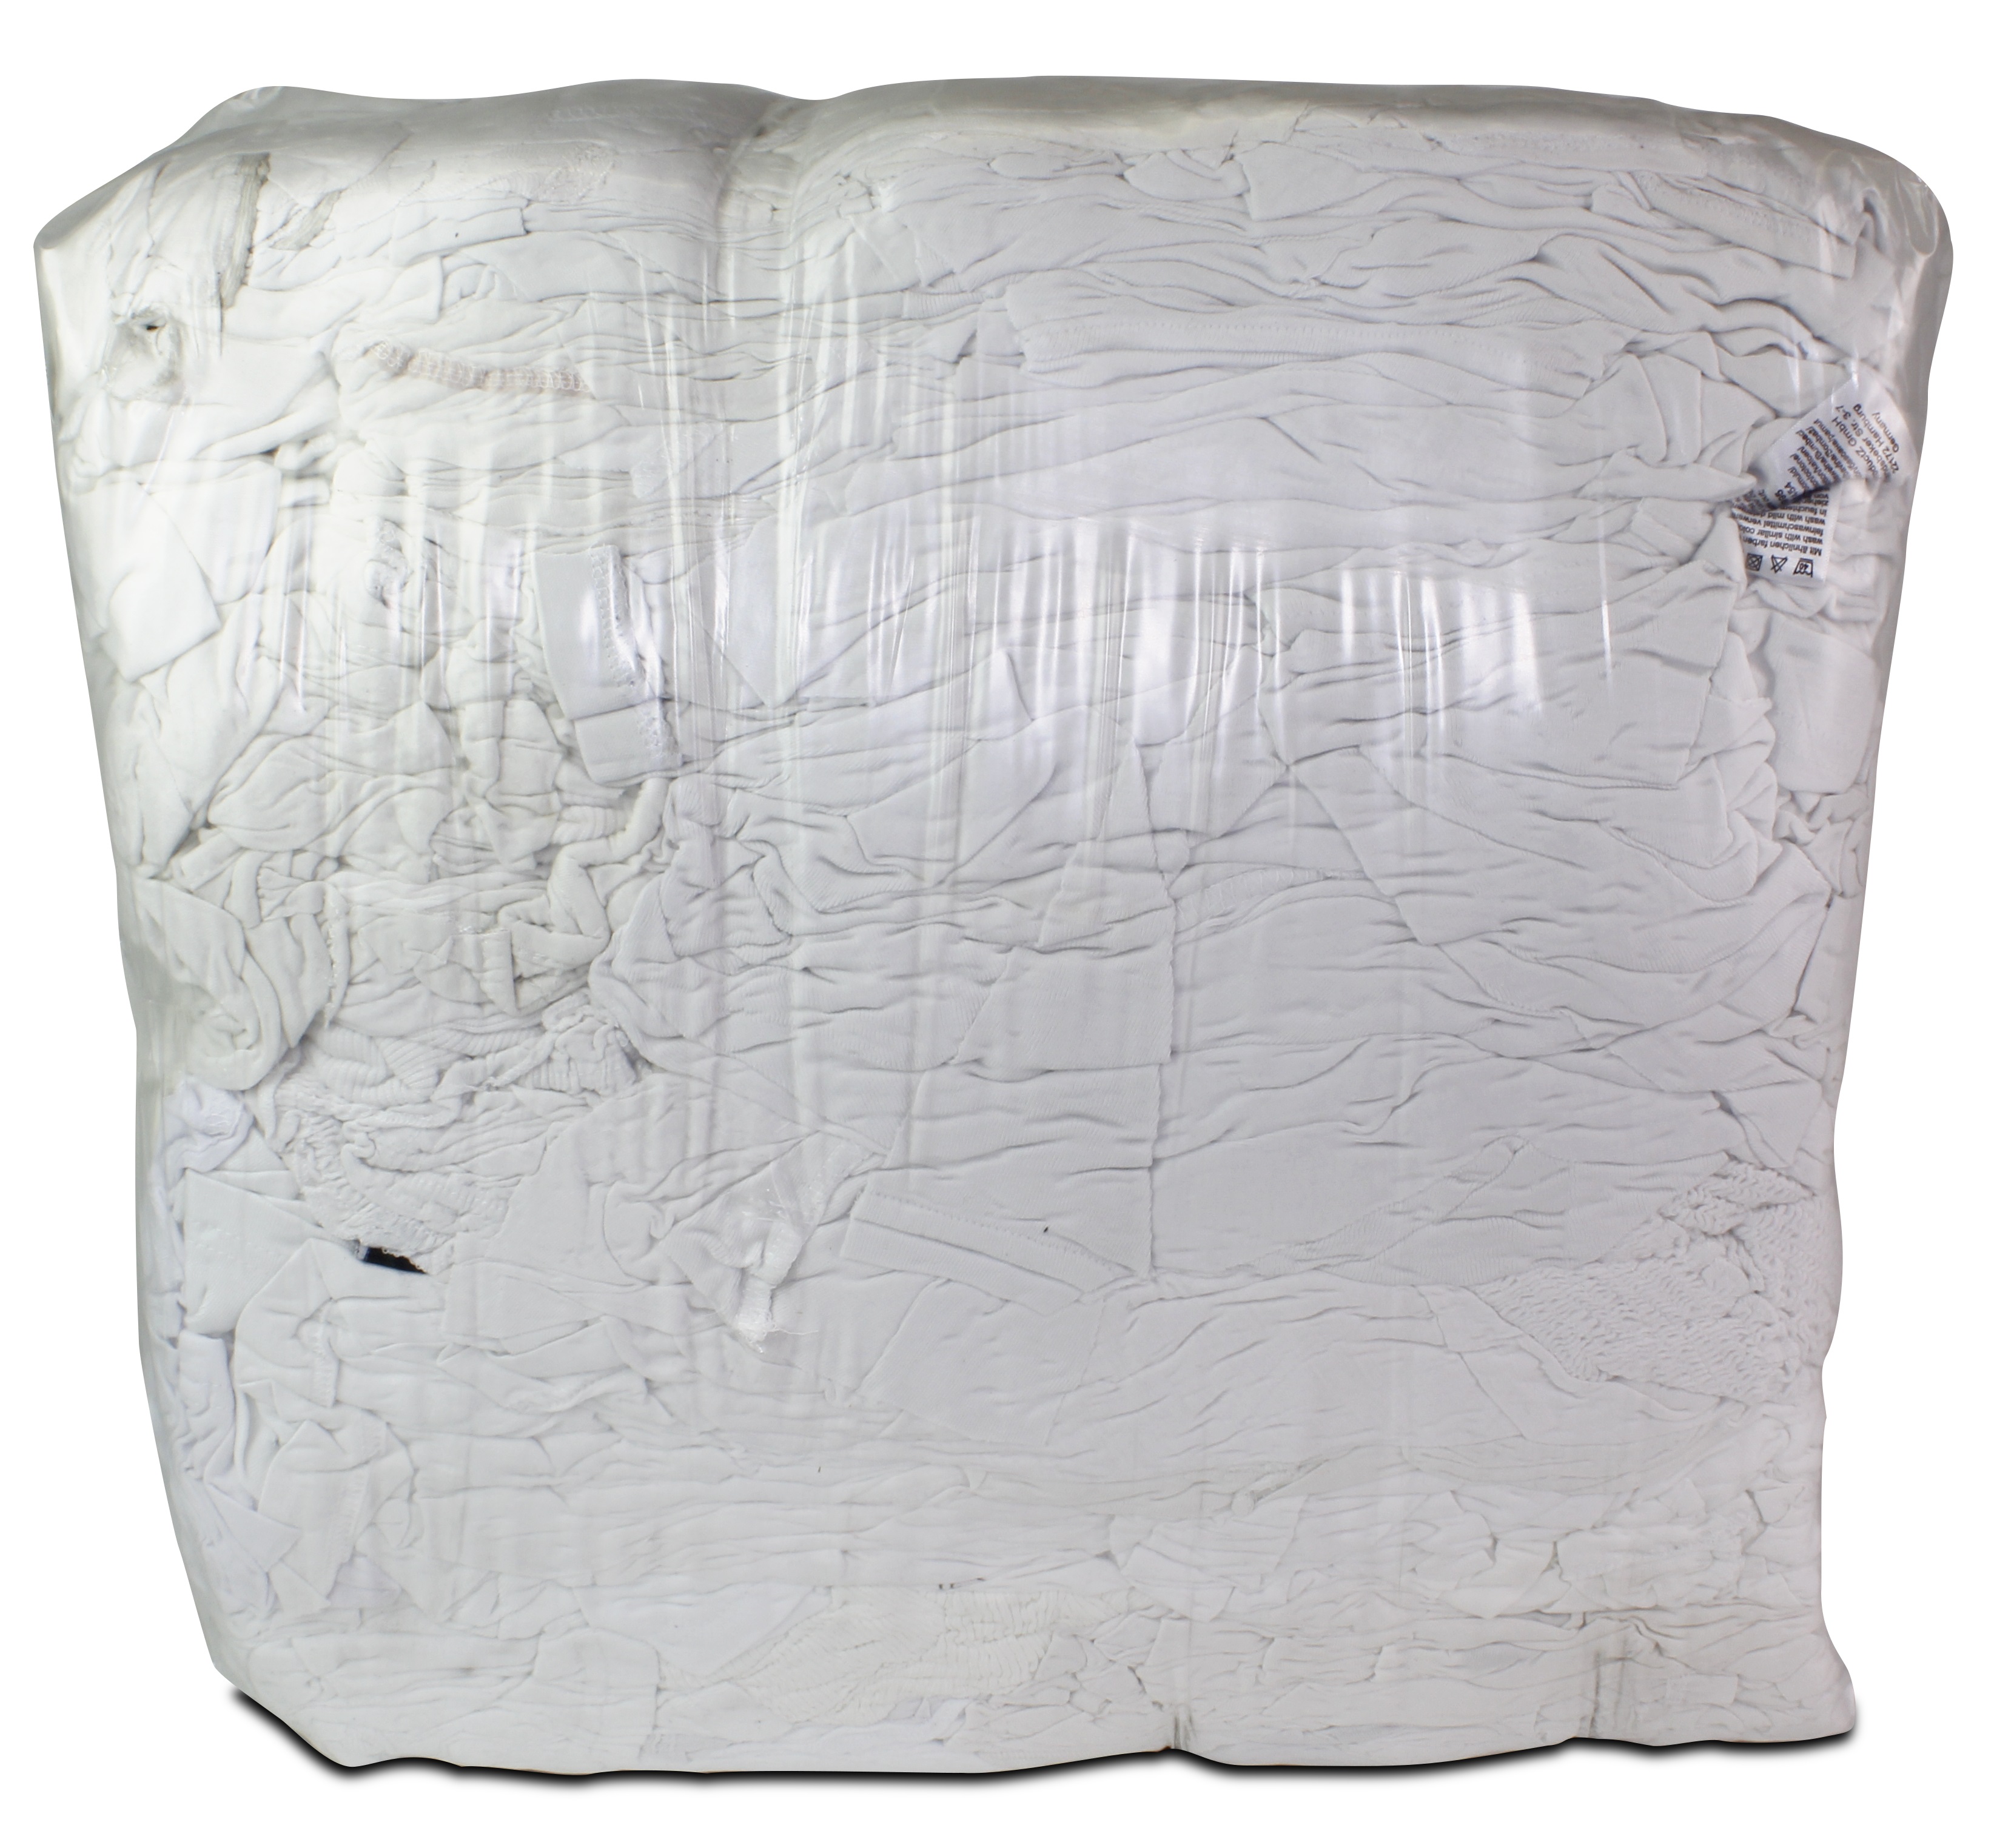 SK04 (10 kg), White Tricot Wiping Rags. 100% cotton tricot. Price per piece (10 kg) 21% VAT incl. Minimum order 1 pallet (45 pieces)